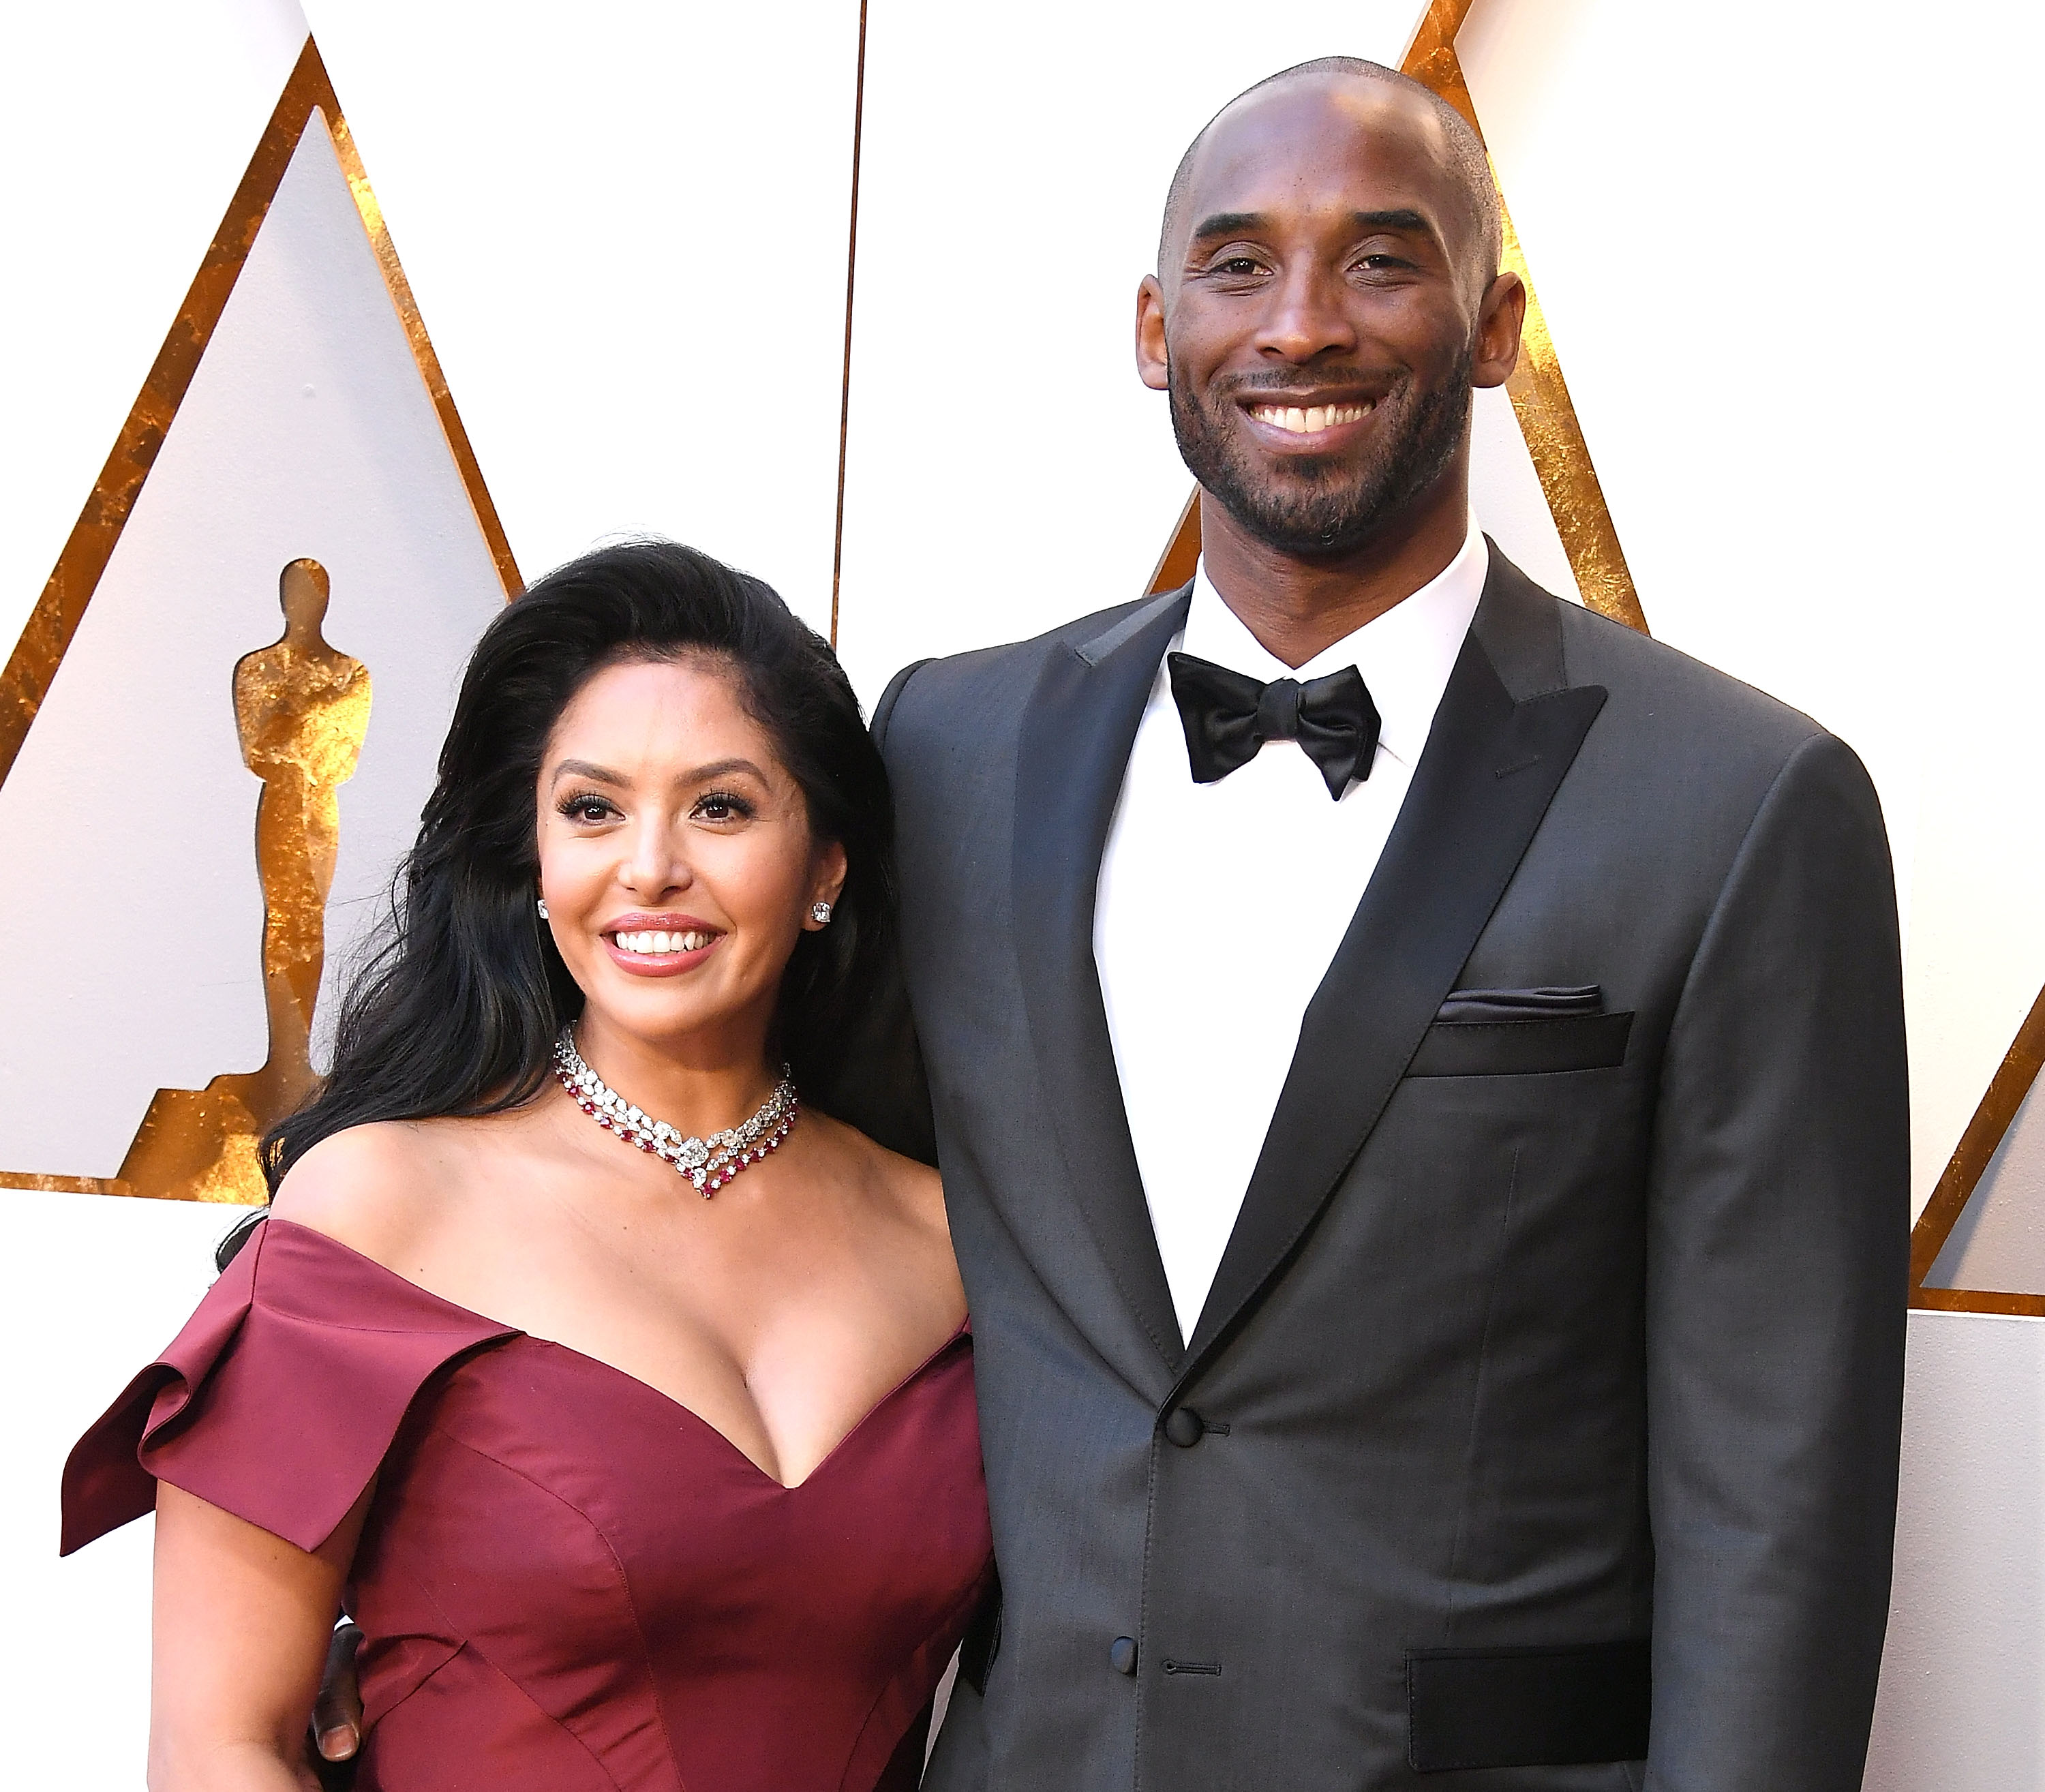 Meek Mill apologizes to Vanessa Bryant over 'disrespectful' Kobe